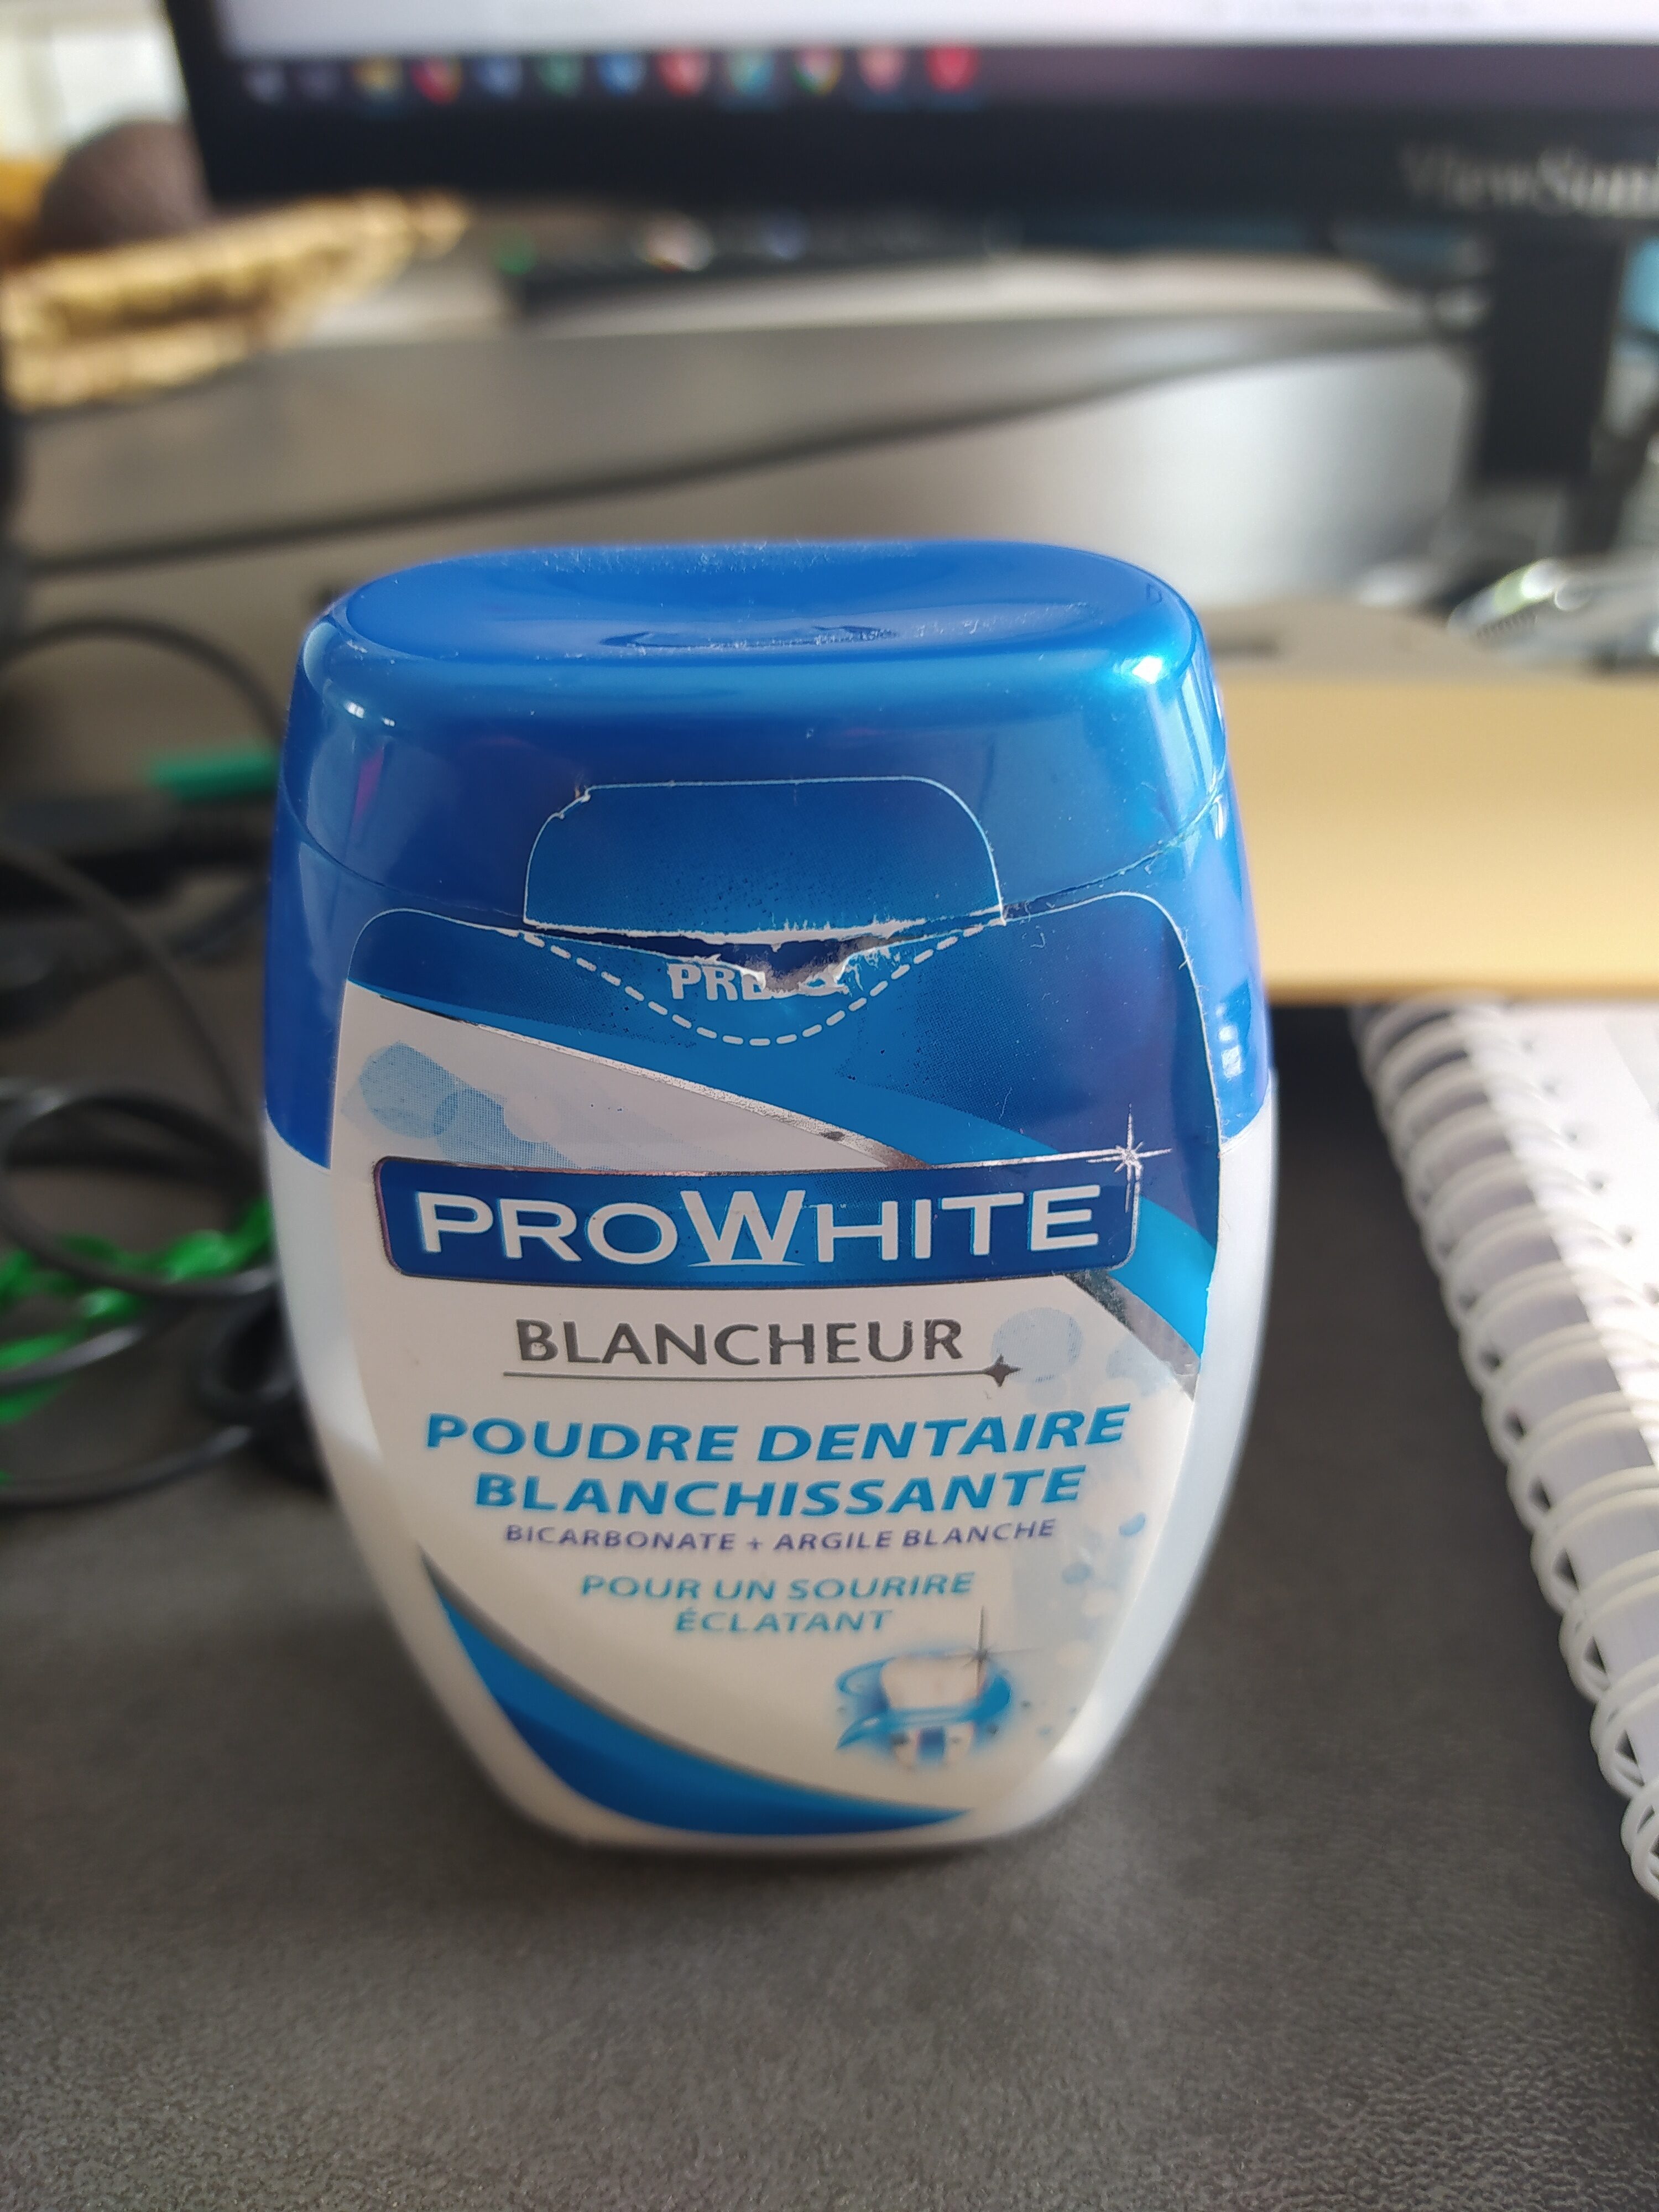 Poudre dentaire blanchissante - Product - fr